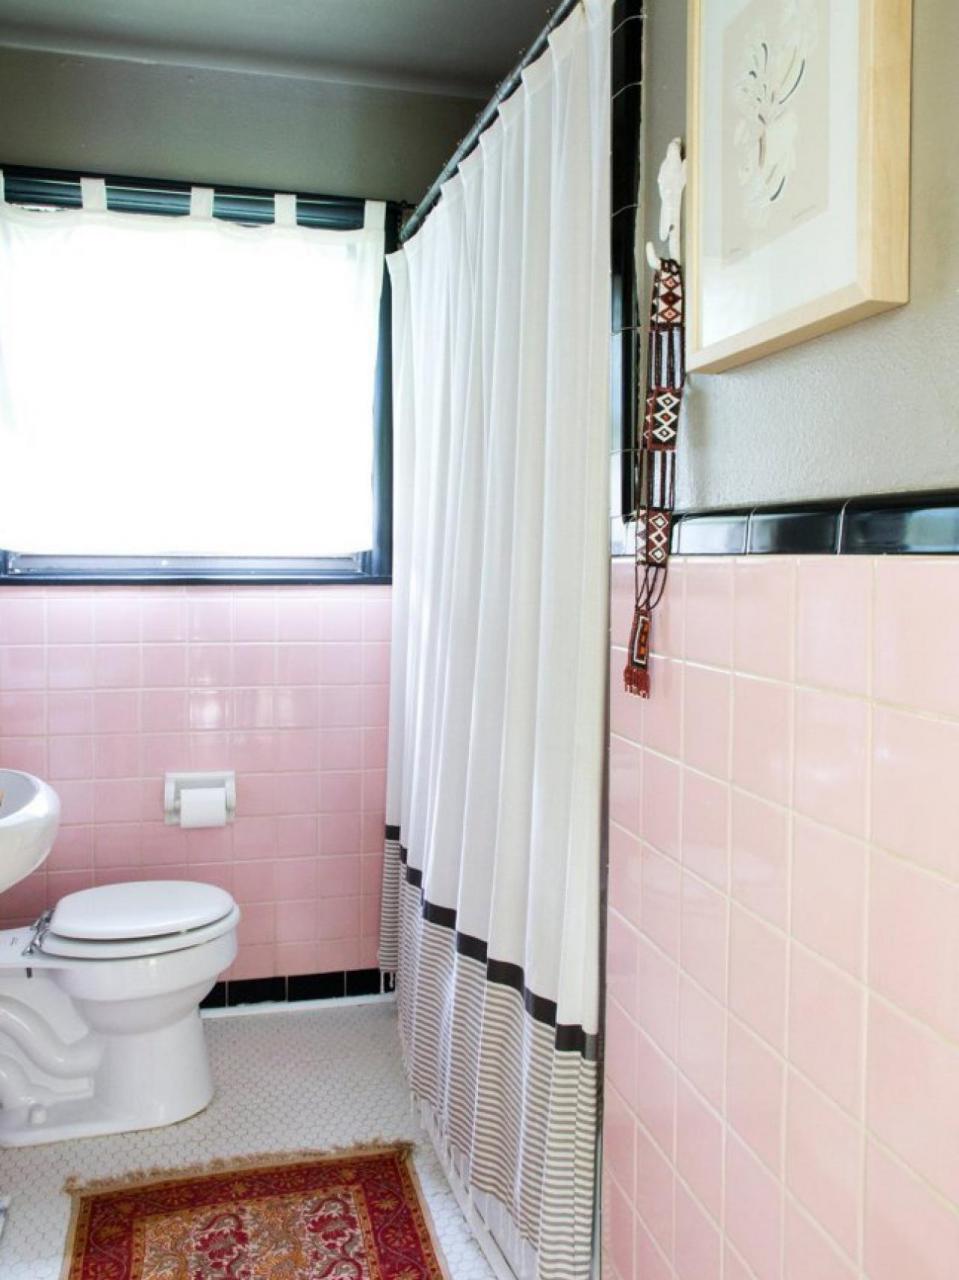 Reasons to Love Retro PinkTiled Bathrooms HGTV's Decorating & Design